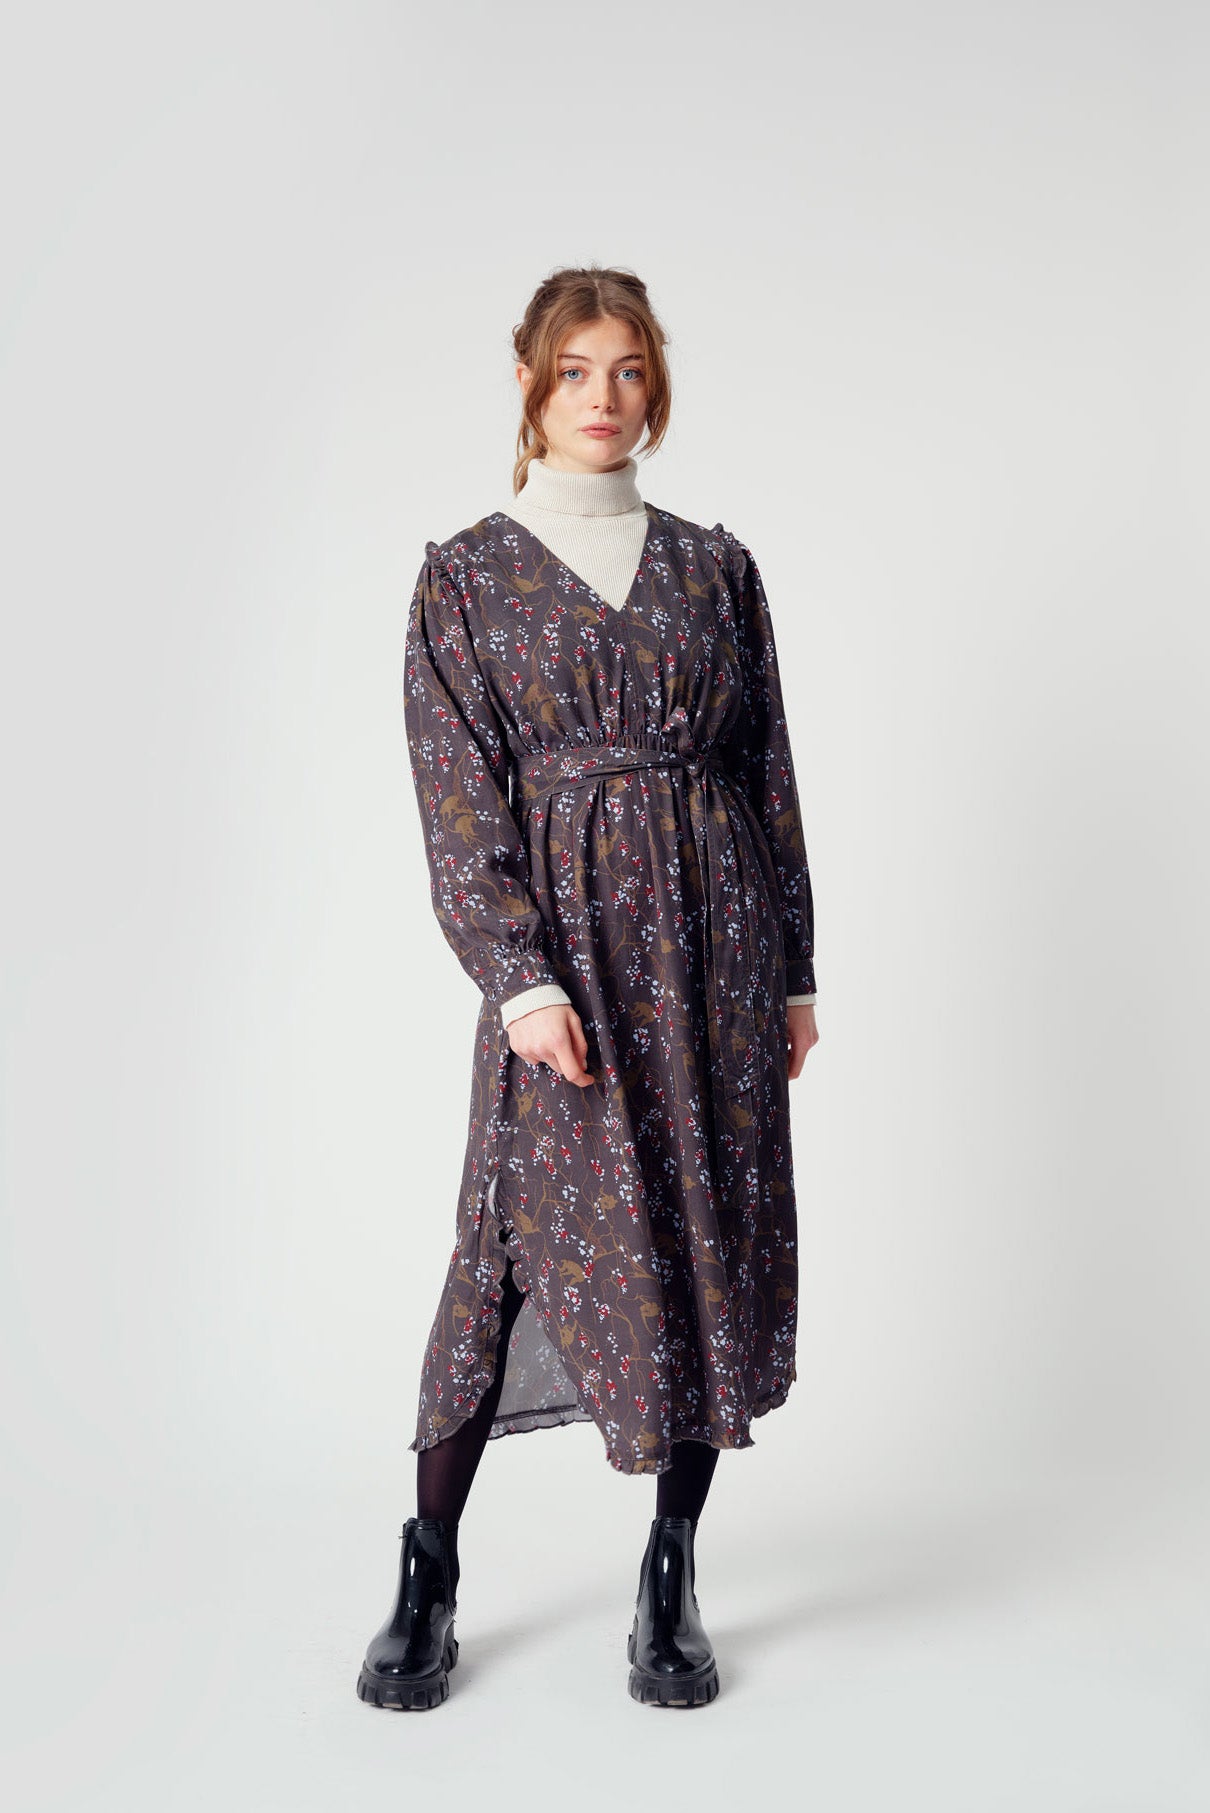 ALINA Womens Tencel Winter Jungle Ivy Dress, Size 4 / UK 14 / EUR 42